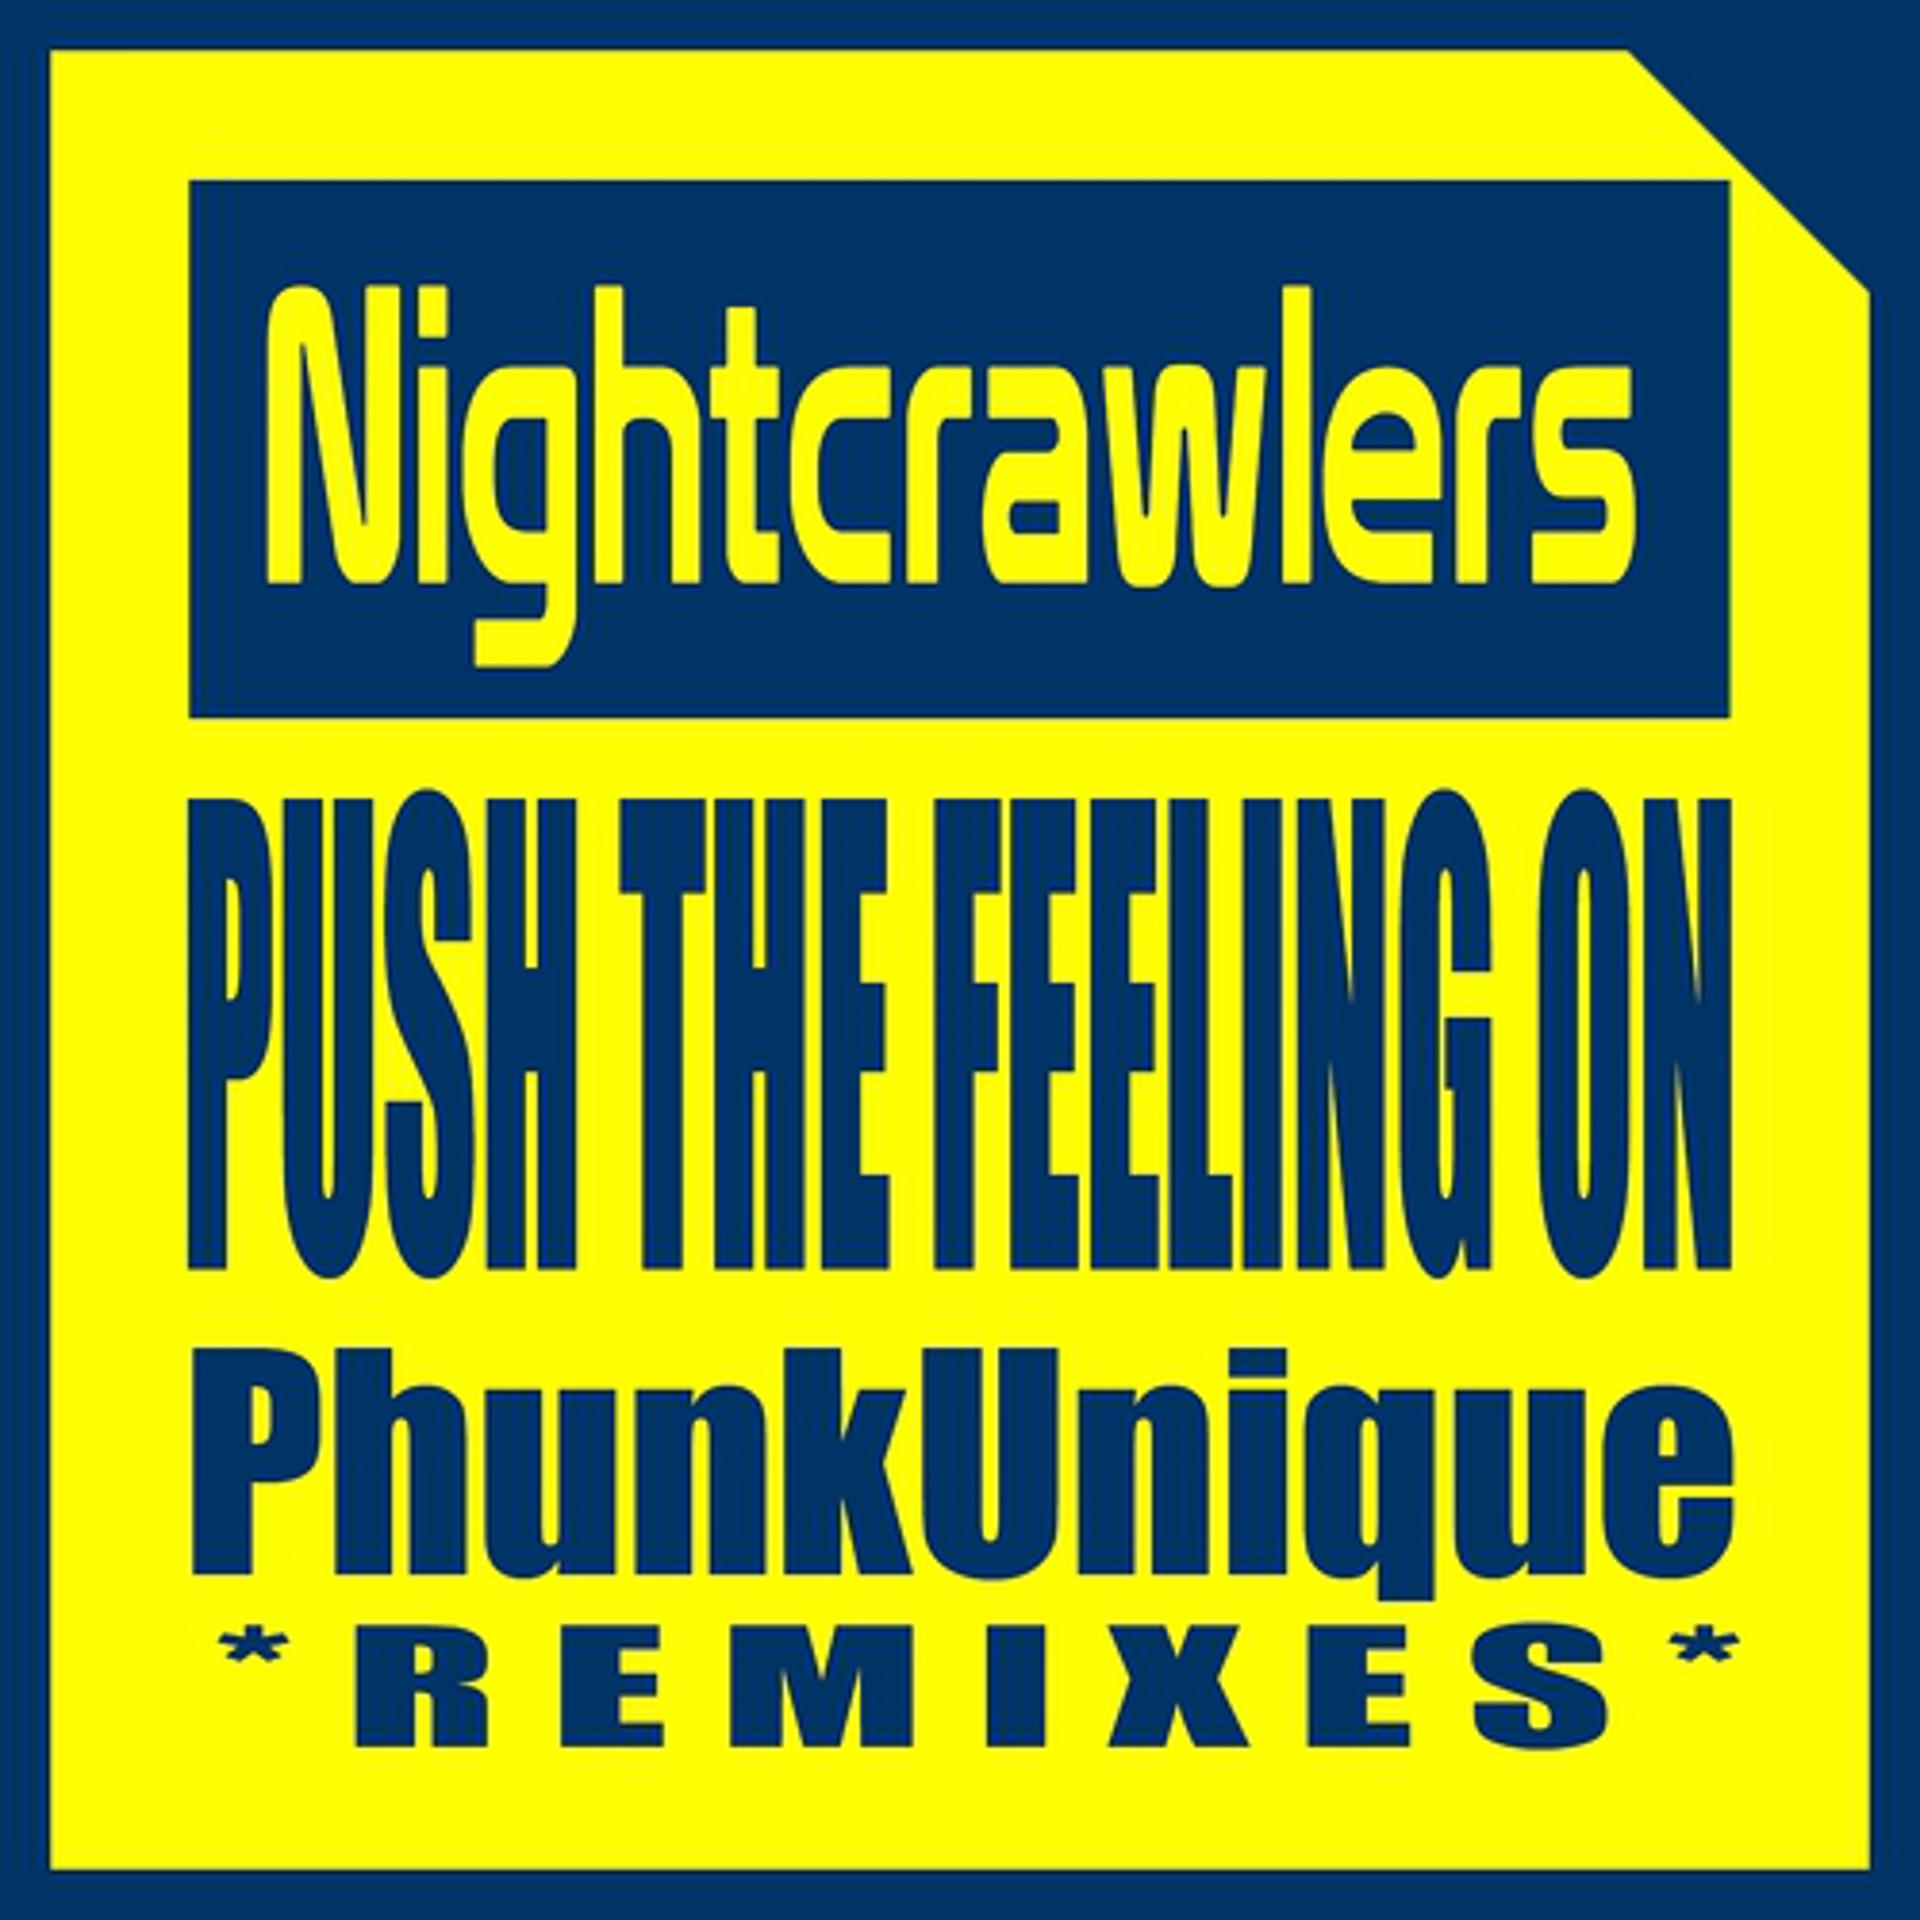 Nightcrawlers Push the feeling on. Nightcrawlers - Push the feeling on (MK Mix 95). Push the feeling on Remix. Nightcrawlers Push the feeling on Single. Nightcrawlers feeling on